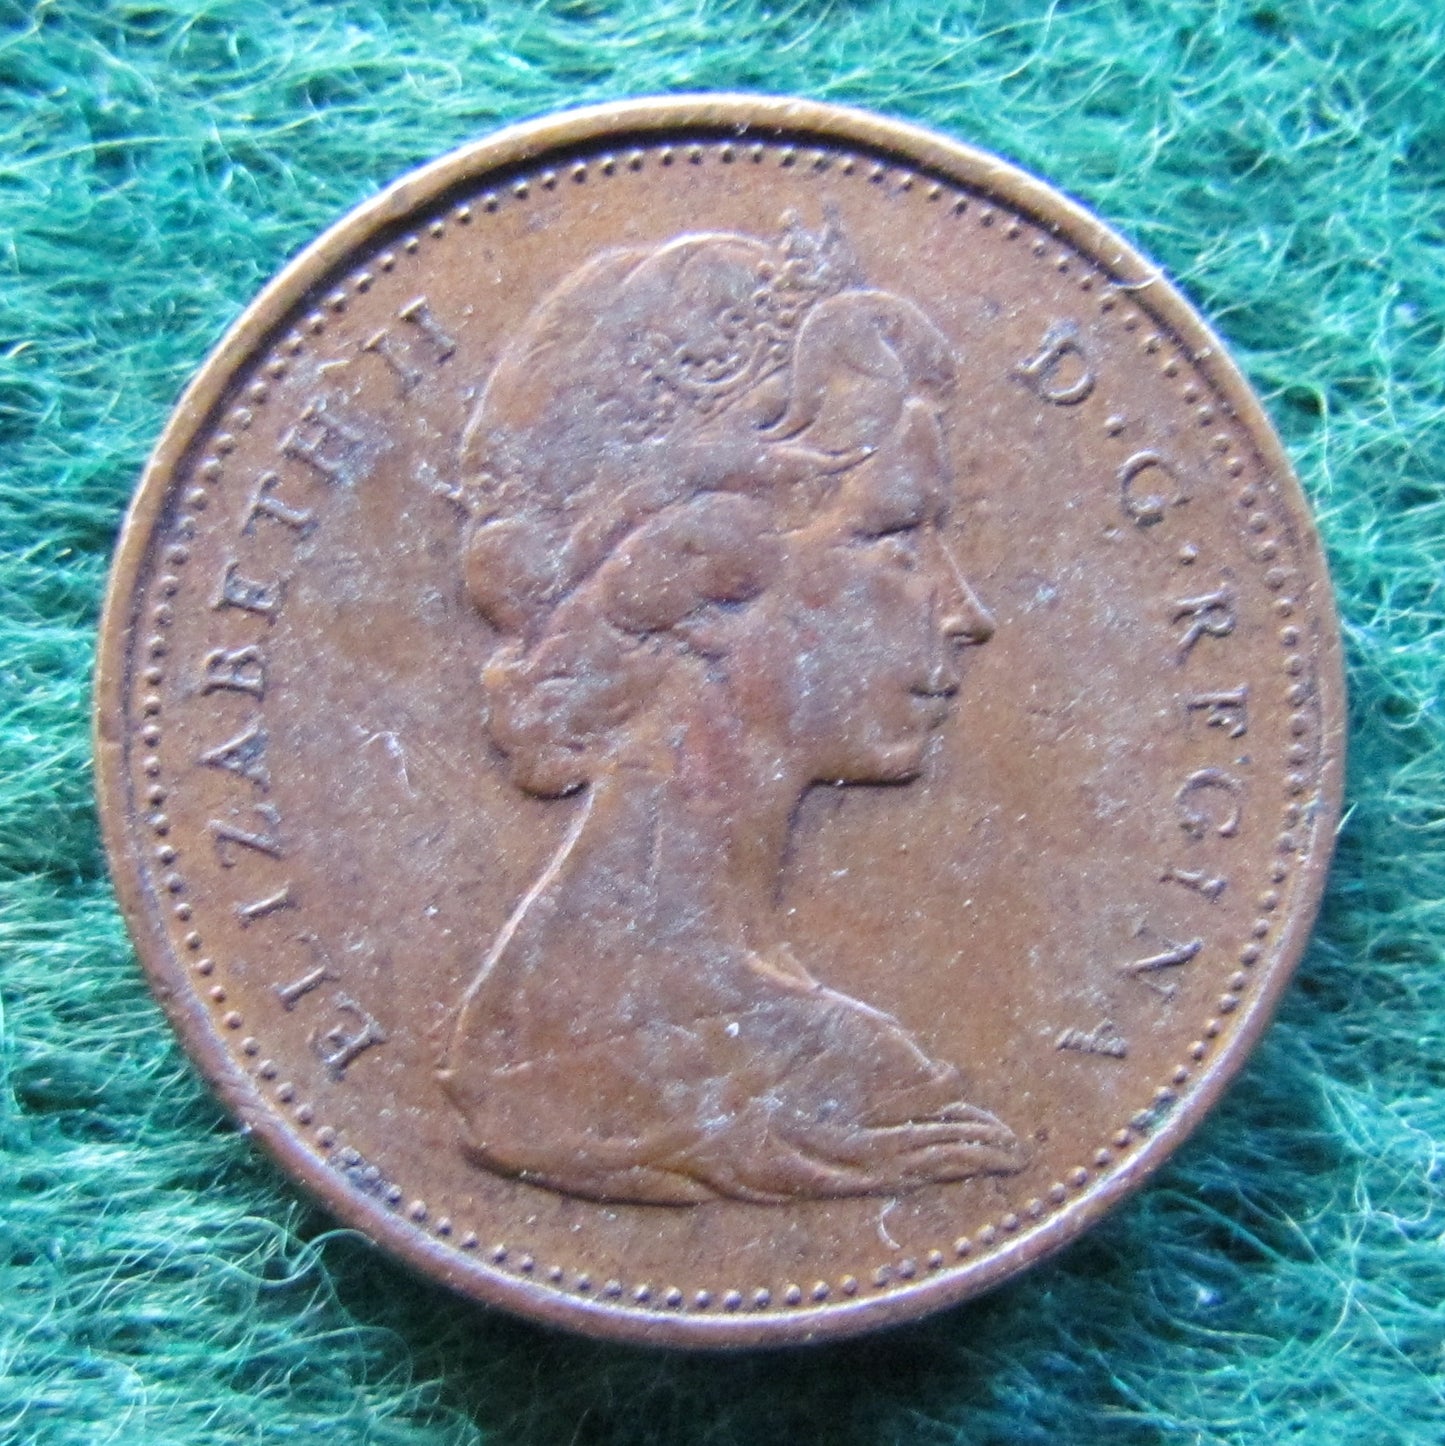 Canada 1970 1 Cent Queen Elizabeth II Coin - Circulated